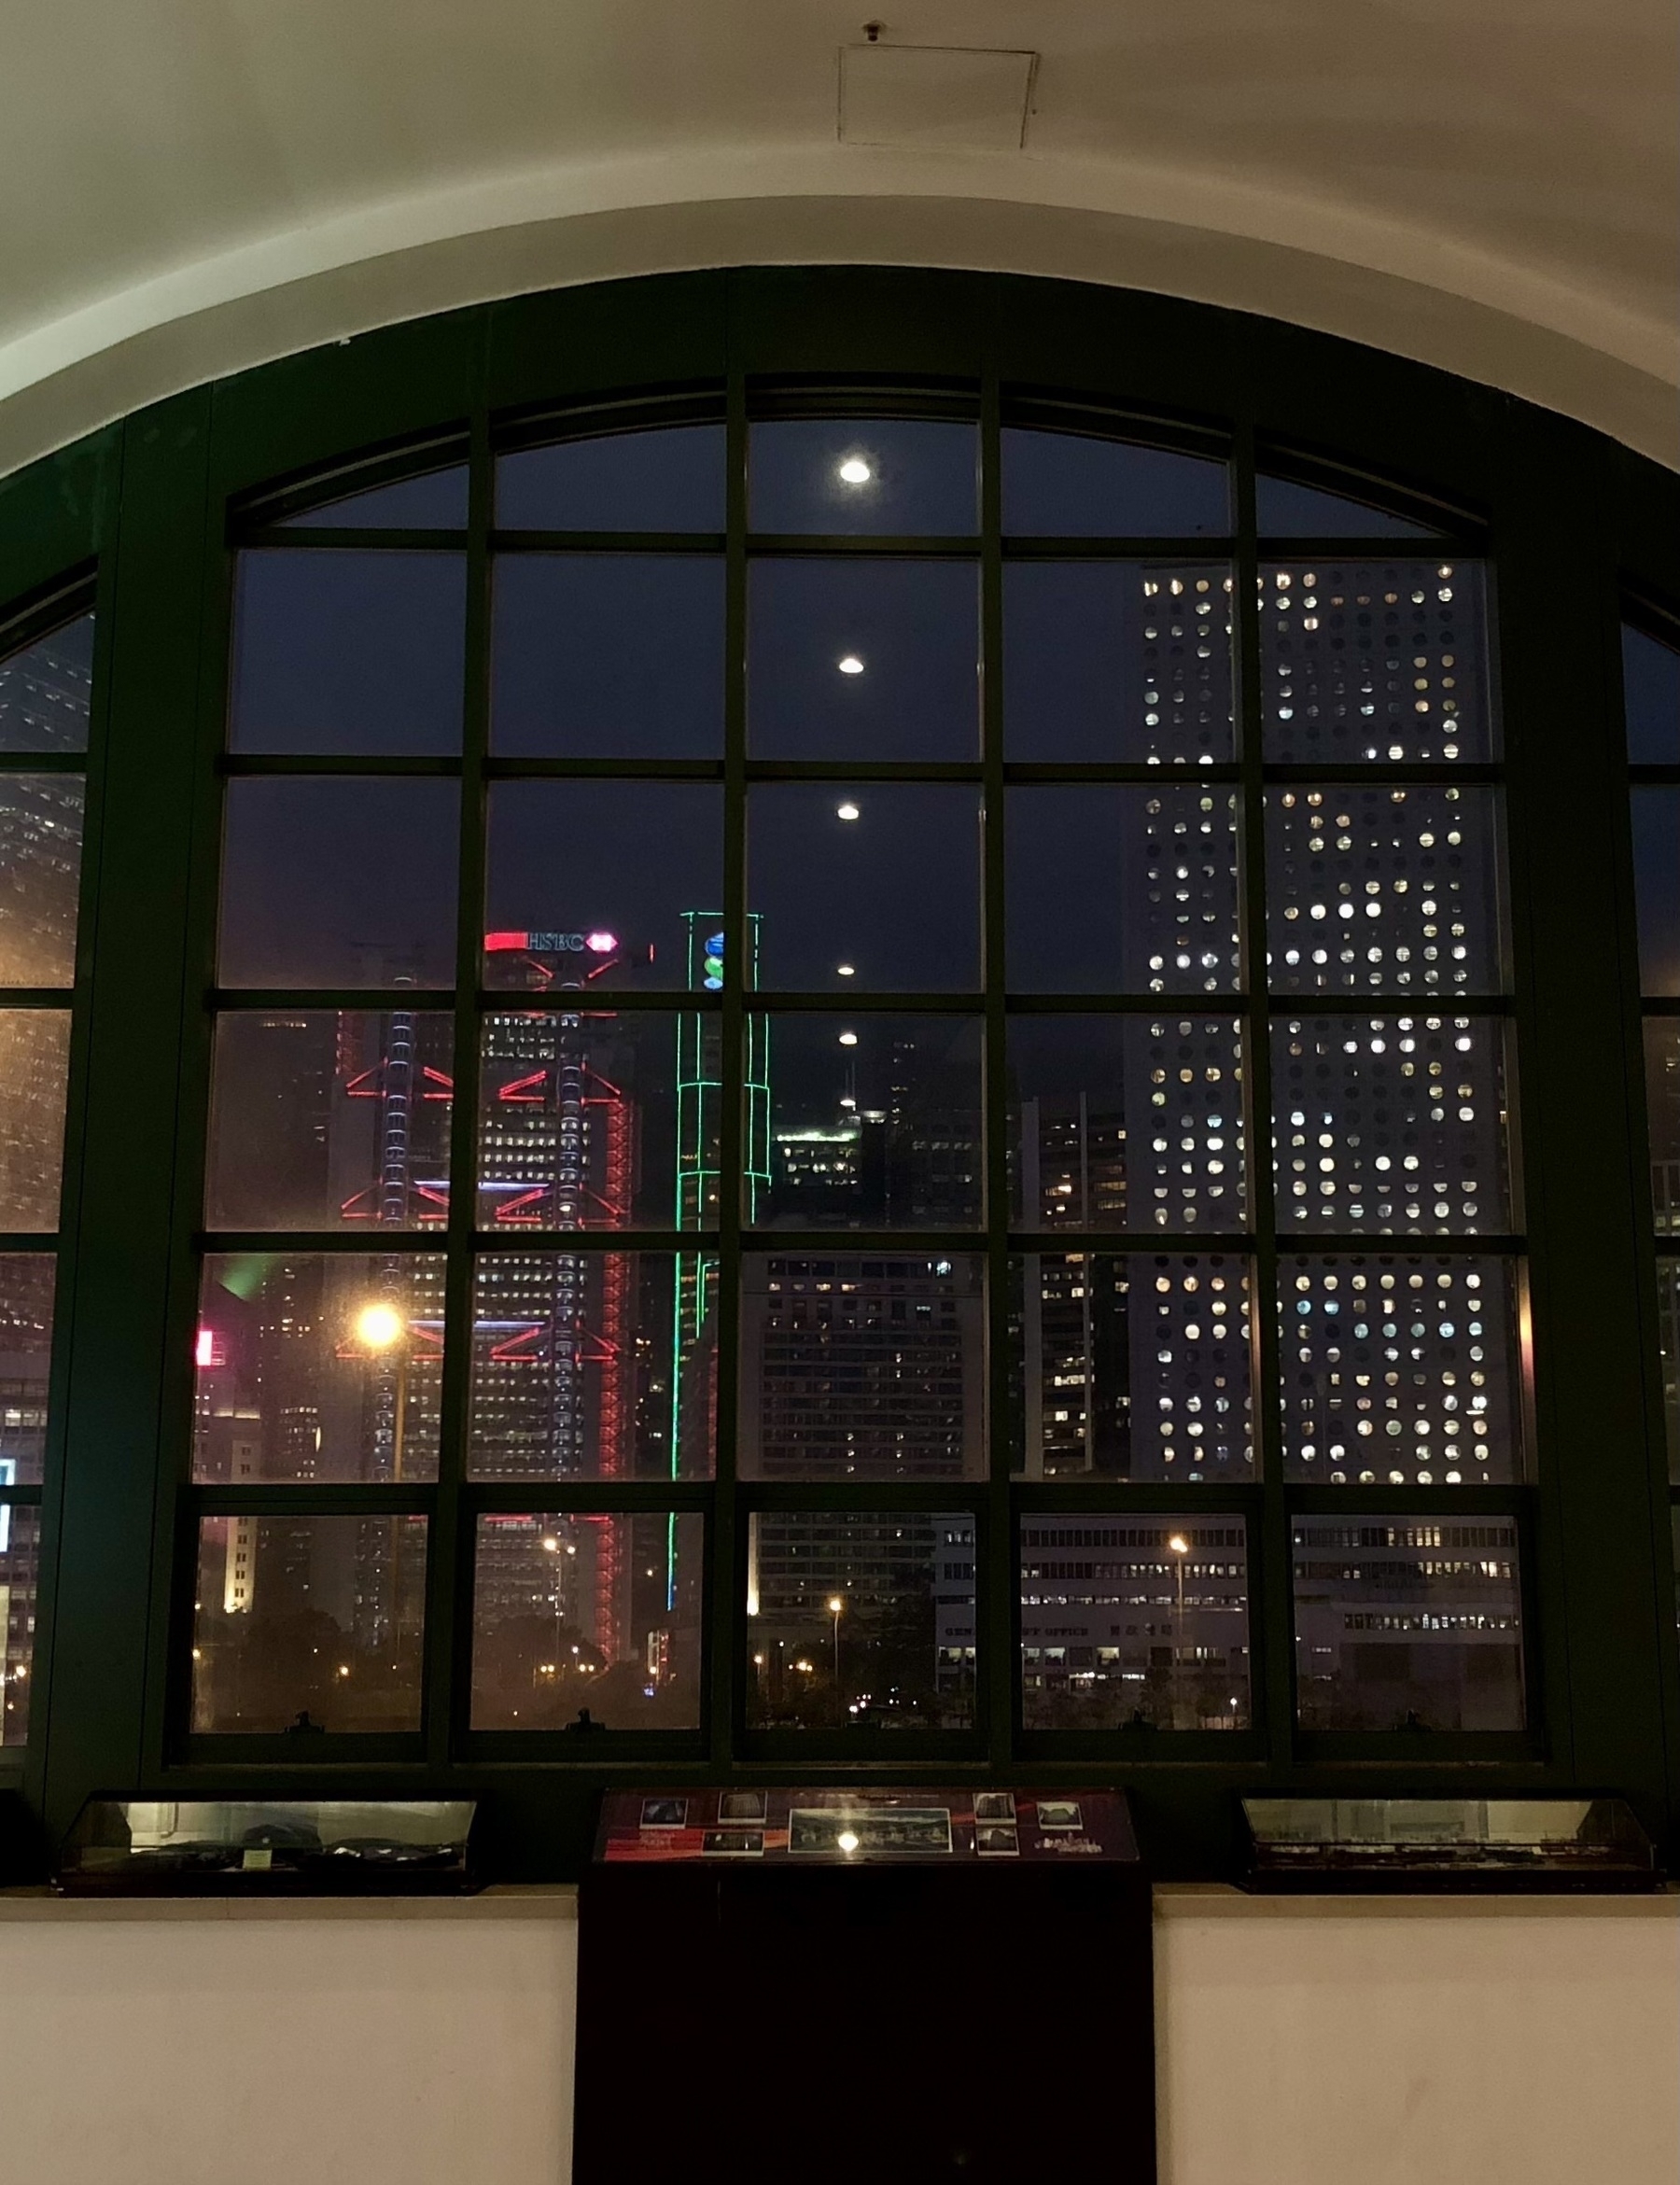 The skyline of Hong Kong seen through a window at night.